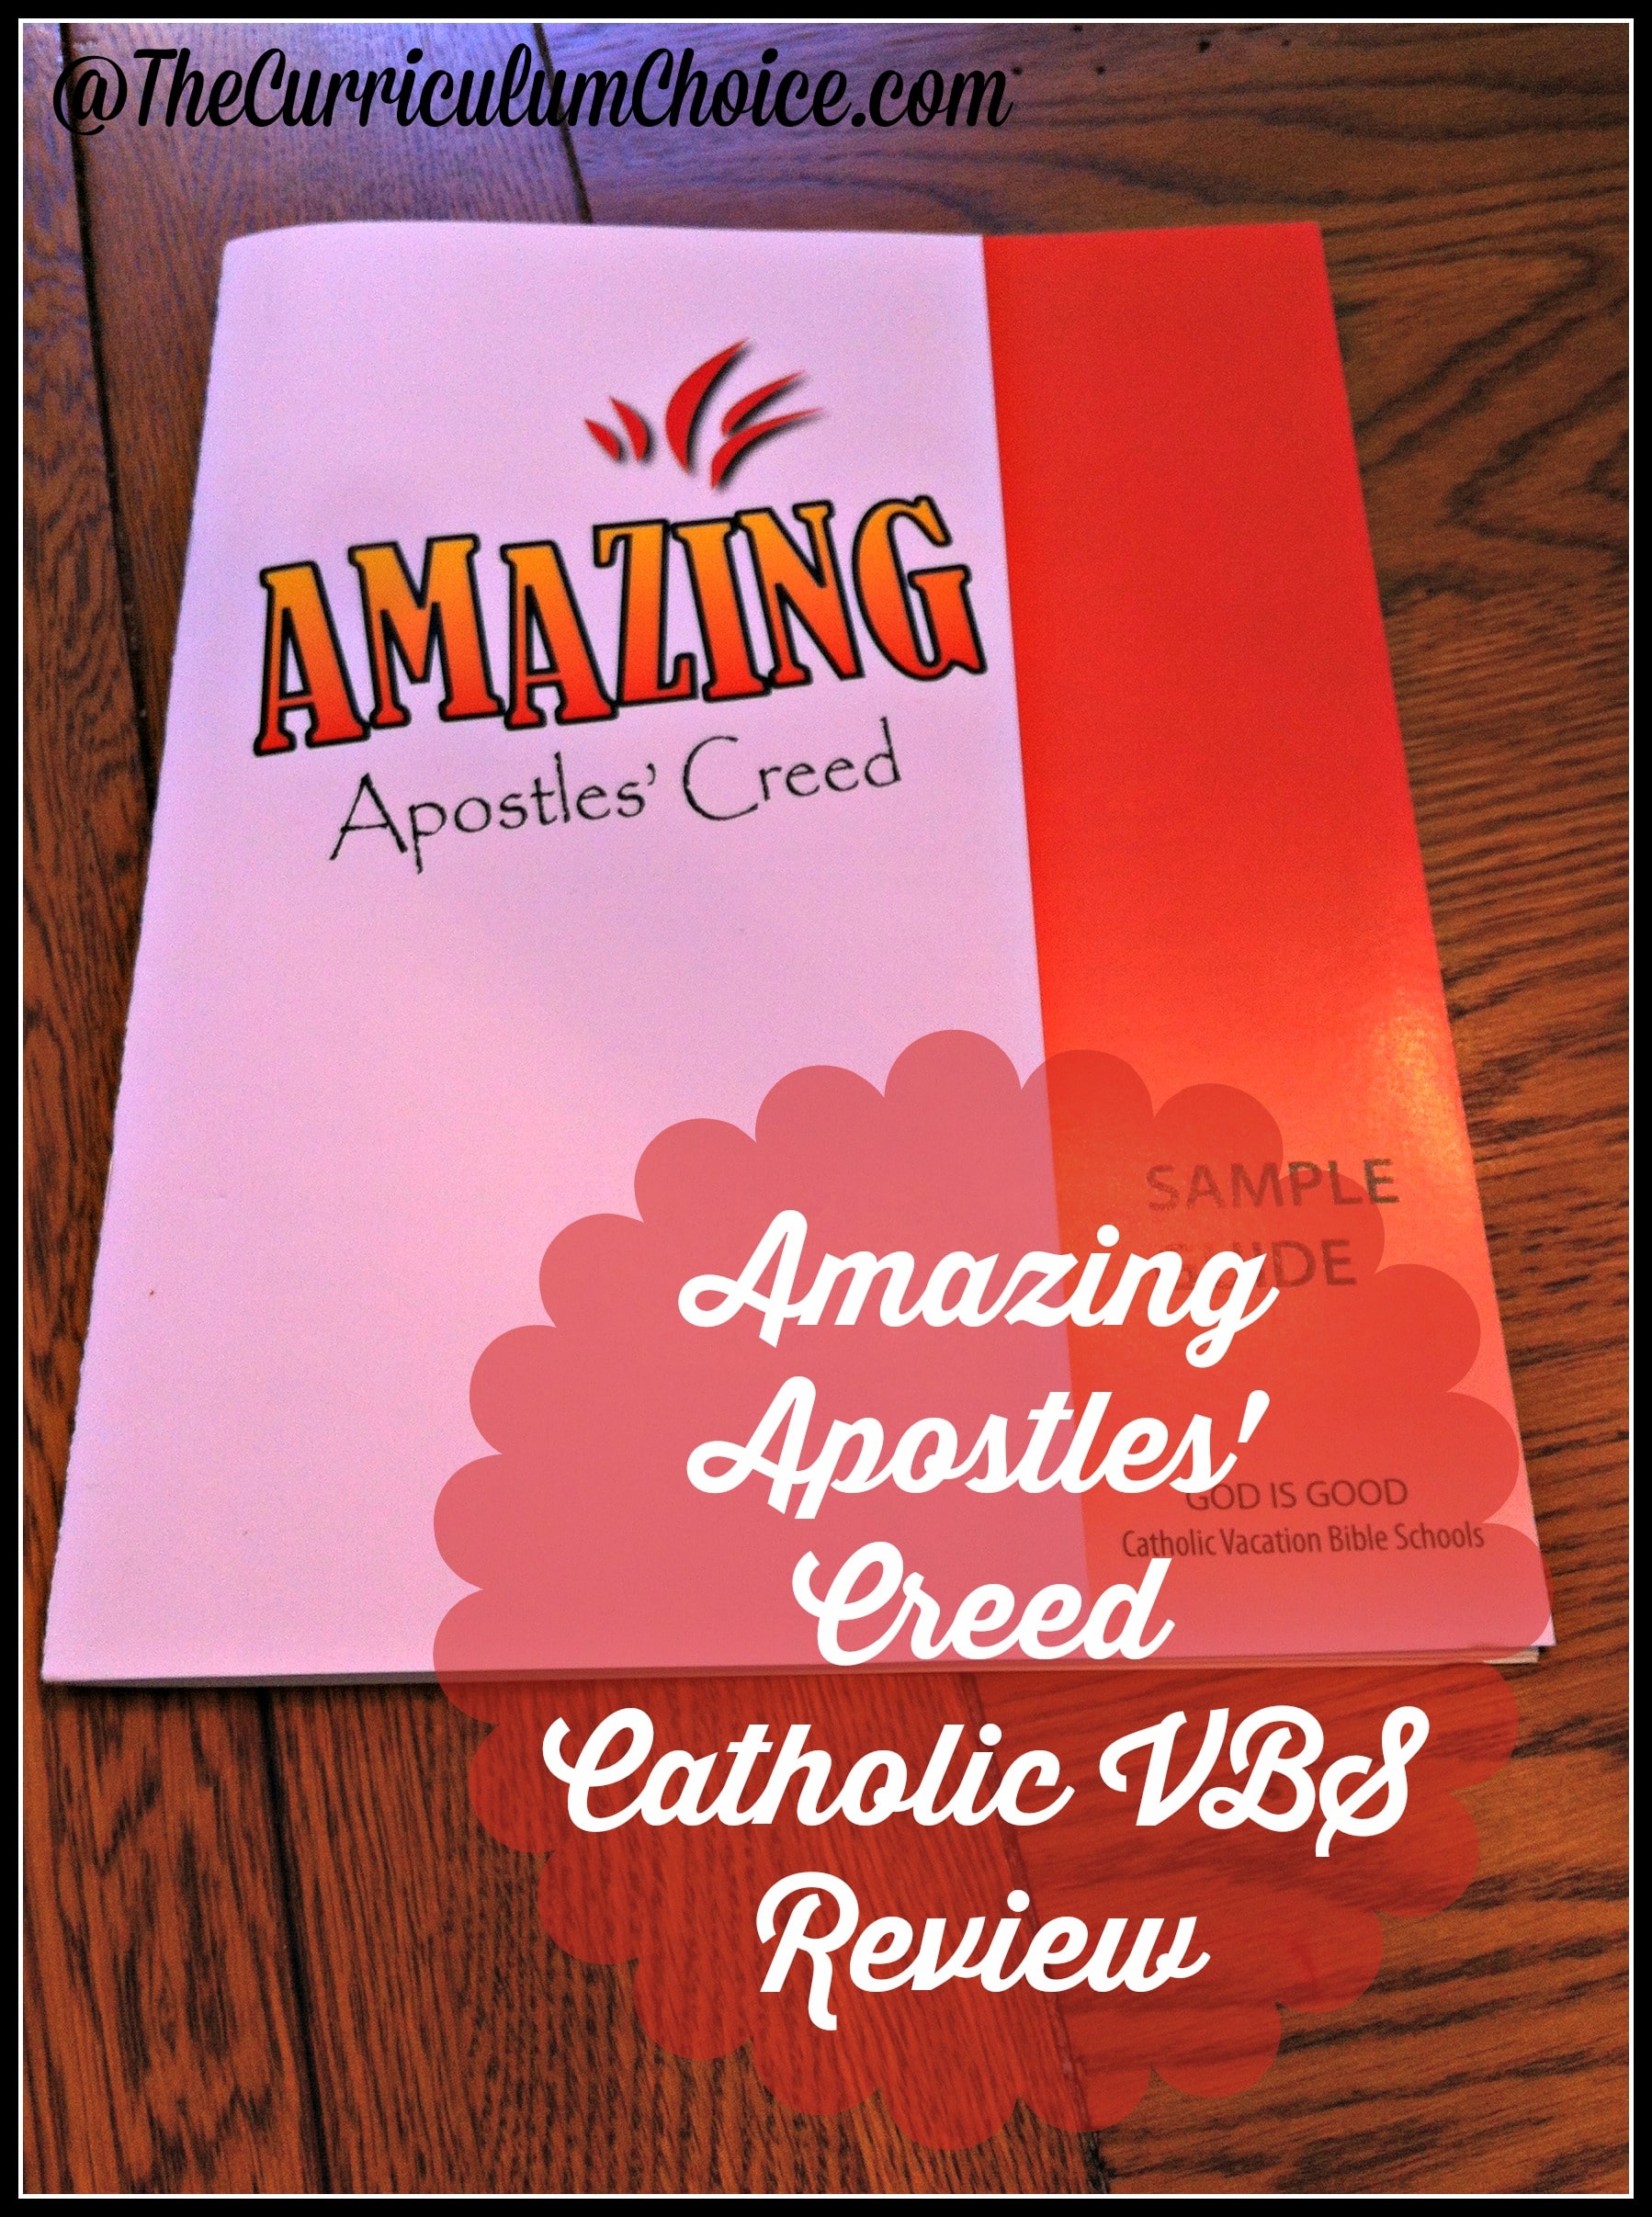 Amazing Apostles’ Creed Catholic VBS Review